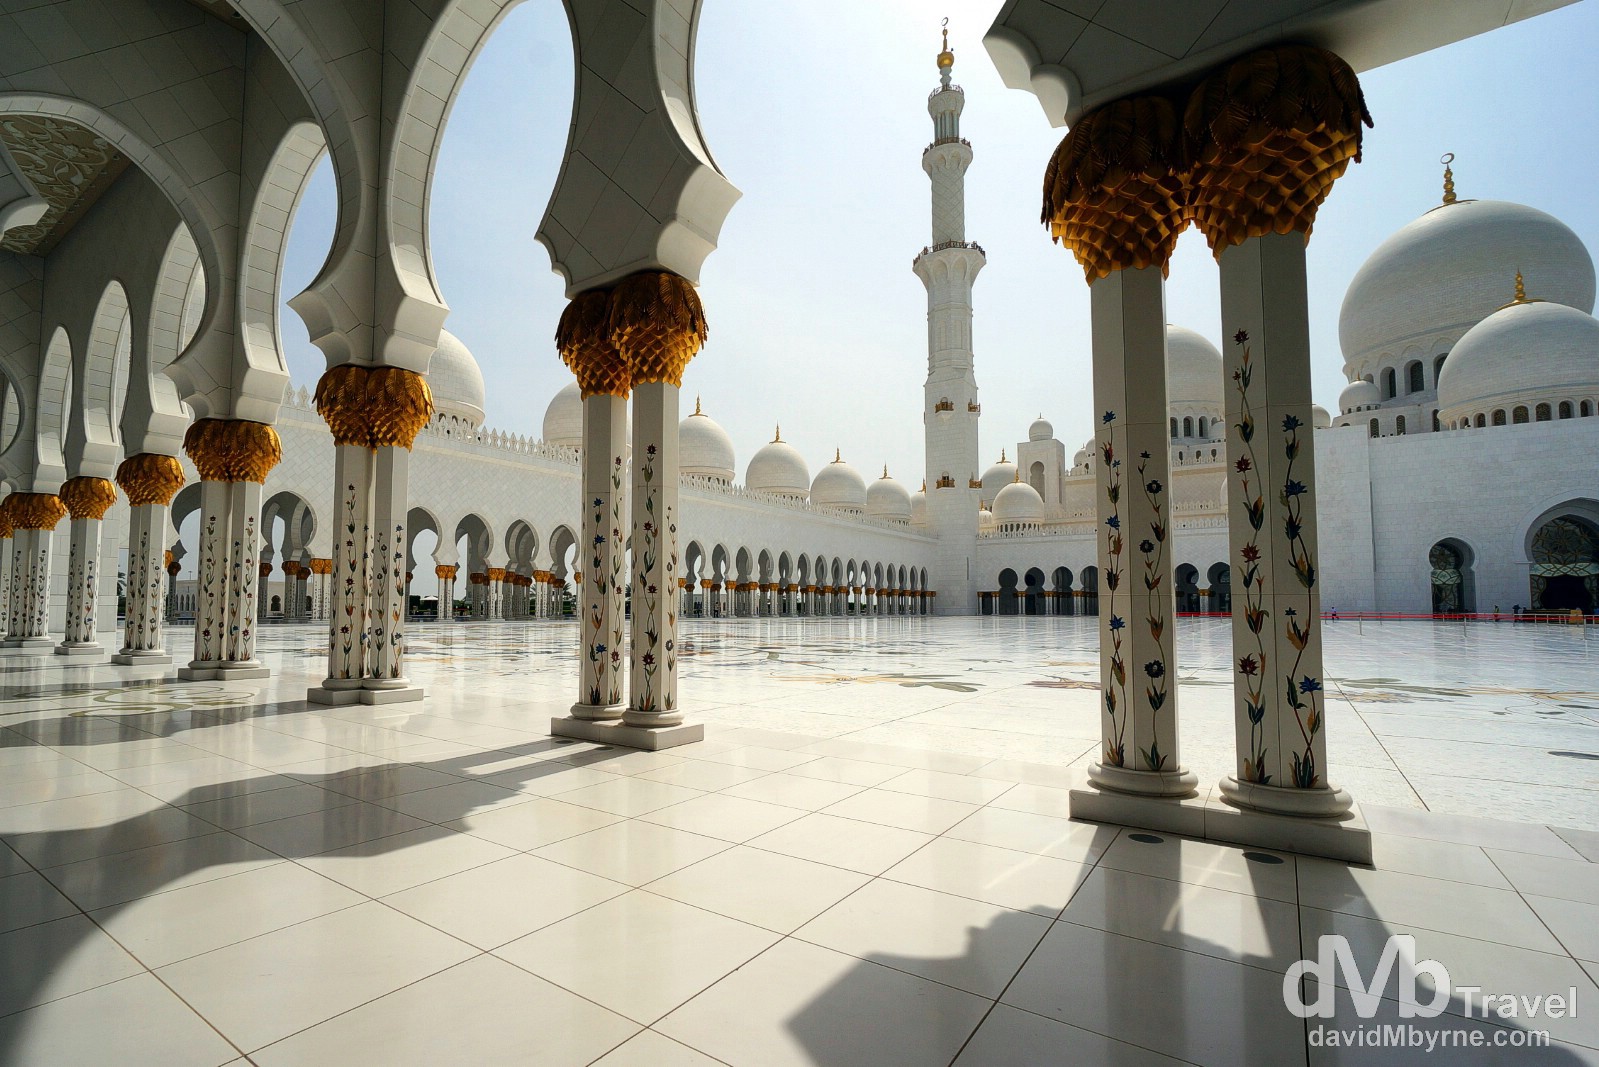 The Sheikh Zayed Grand Mosque in Abu Dhabi, UAE. April 23rd, 2014.